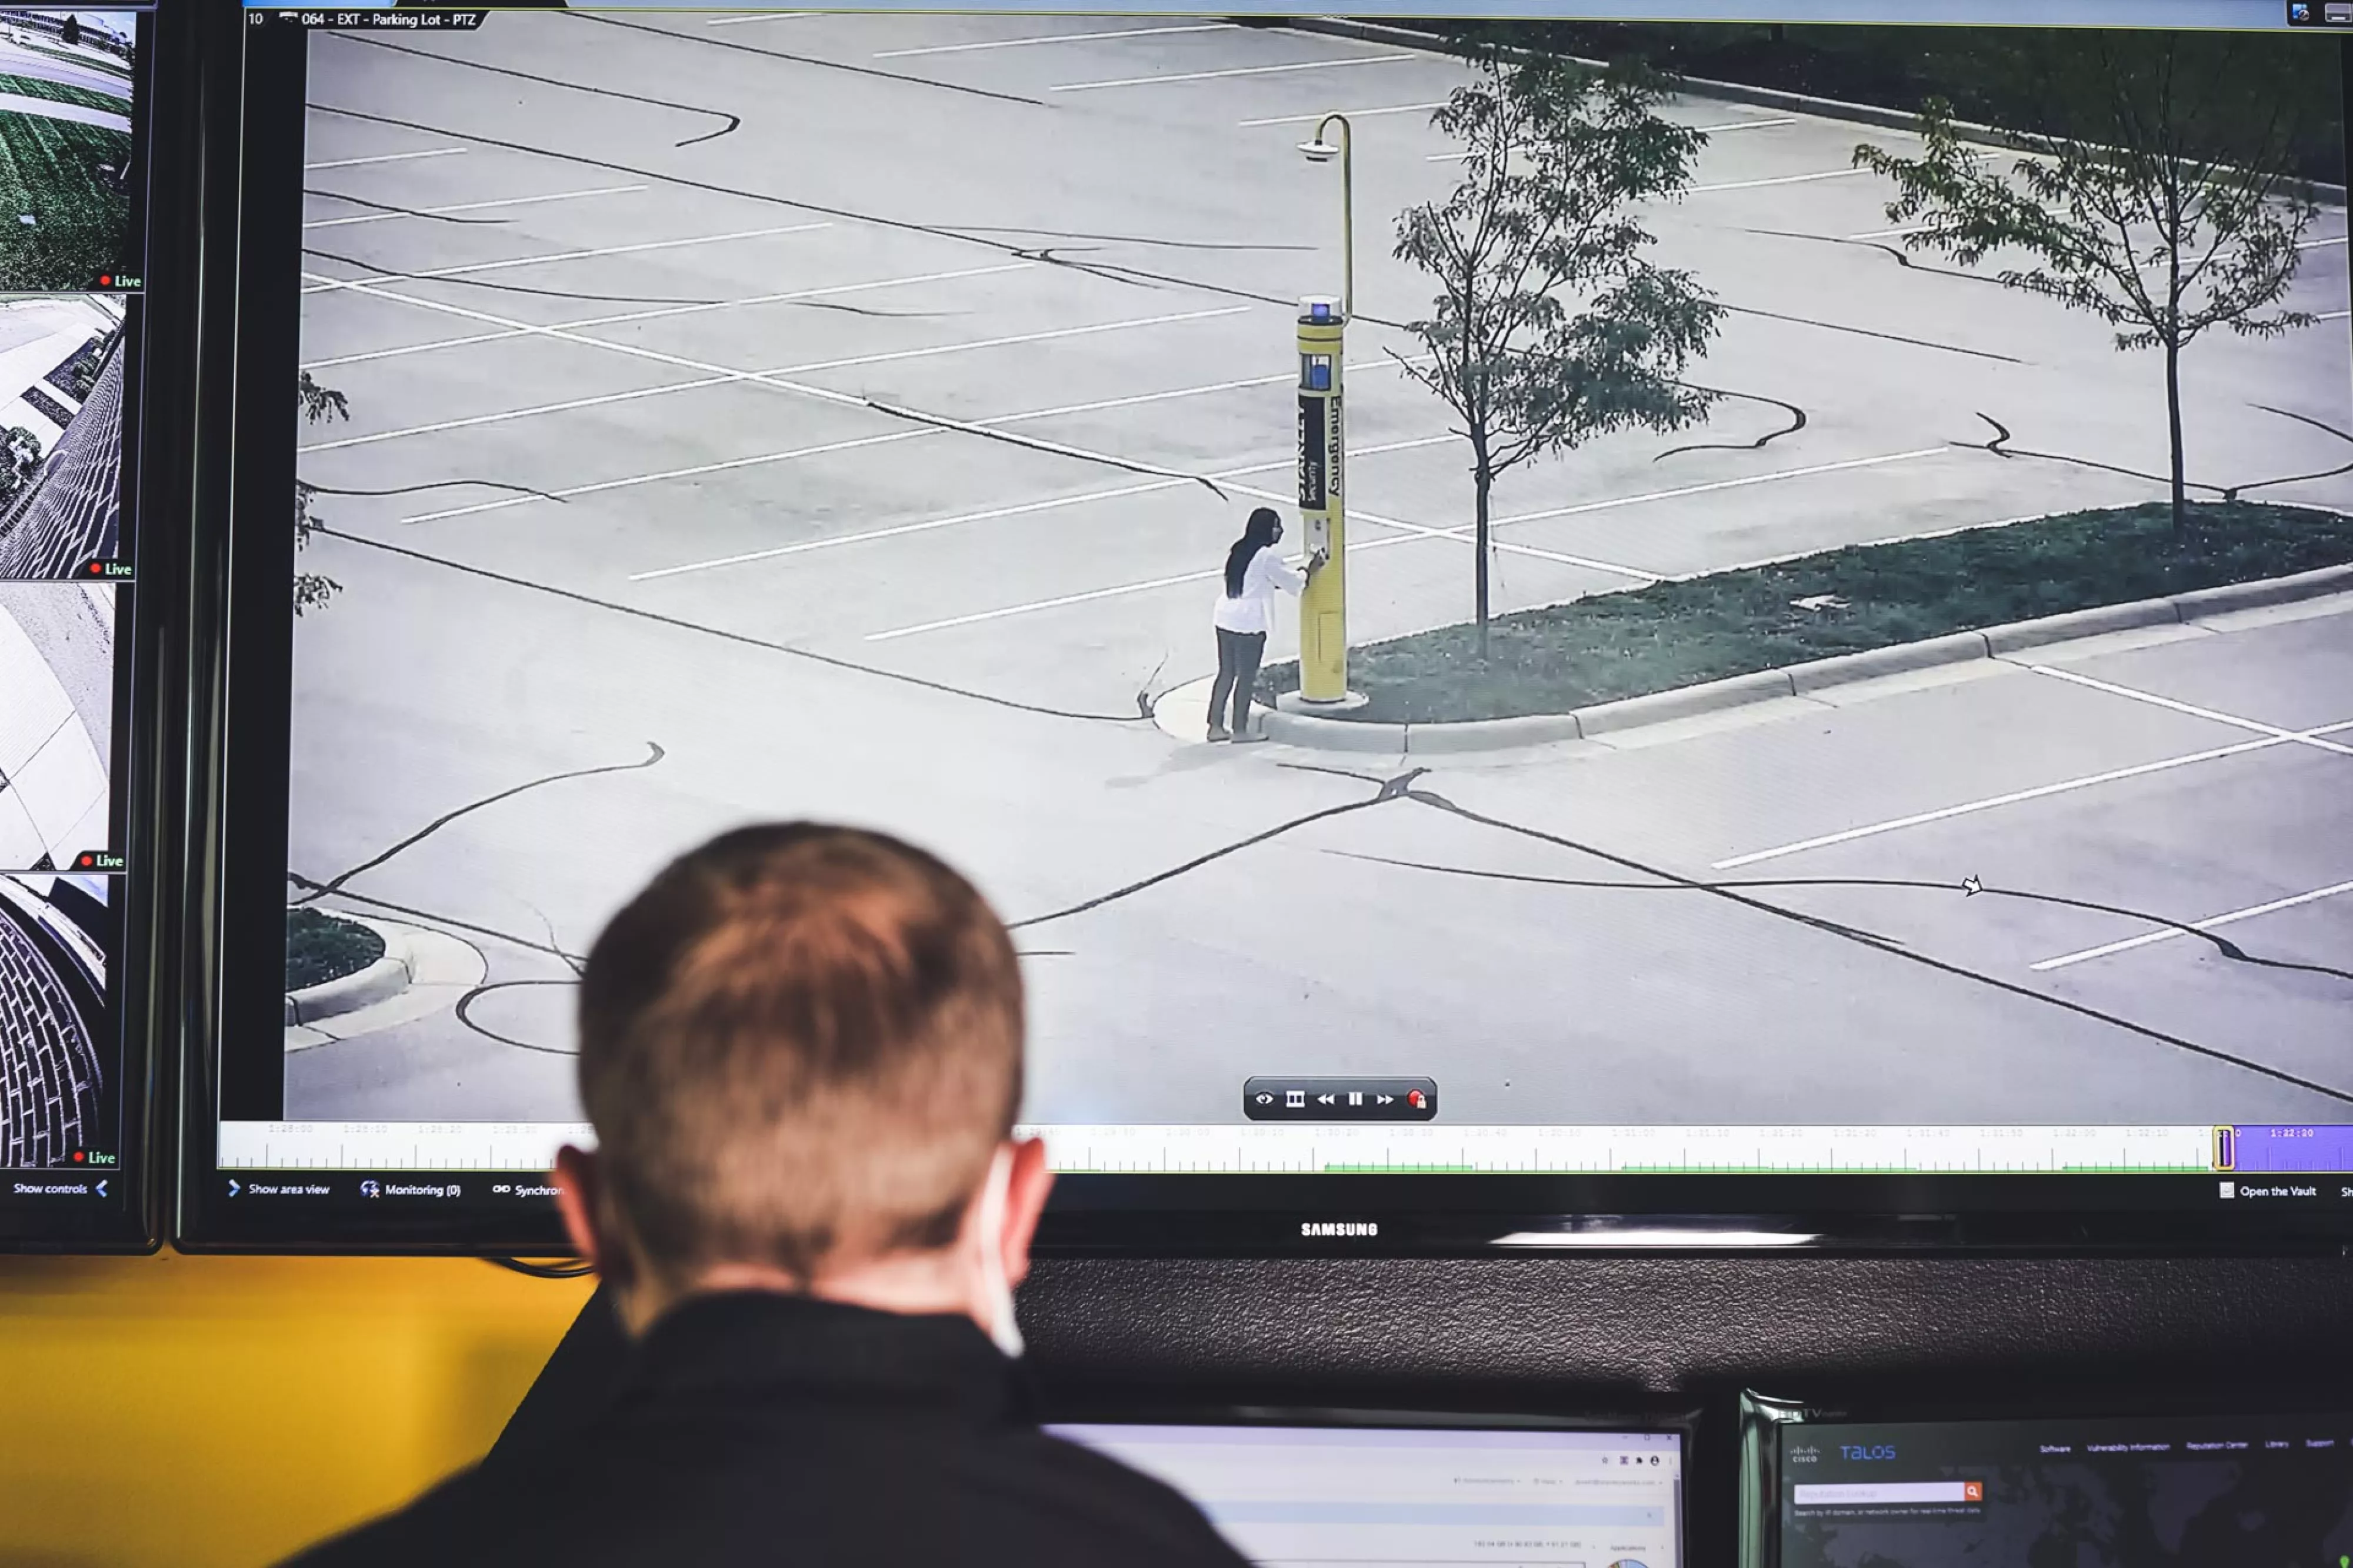 Man watches video surveillance feed